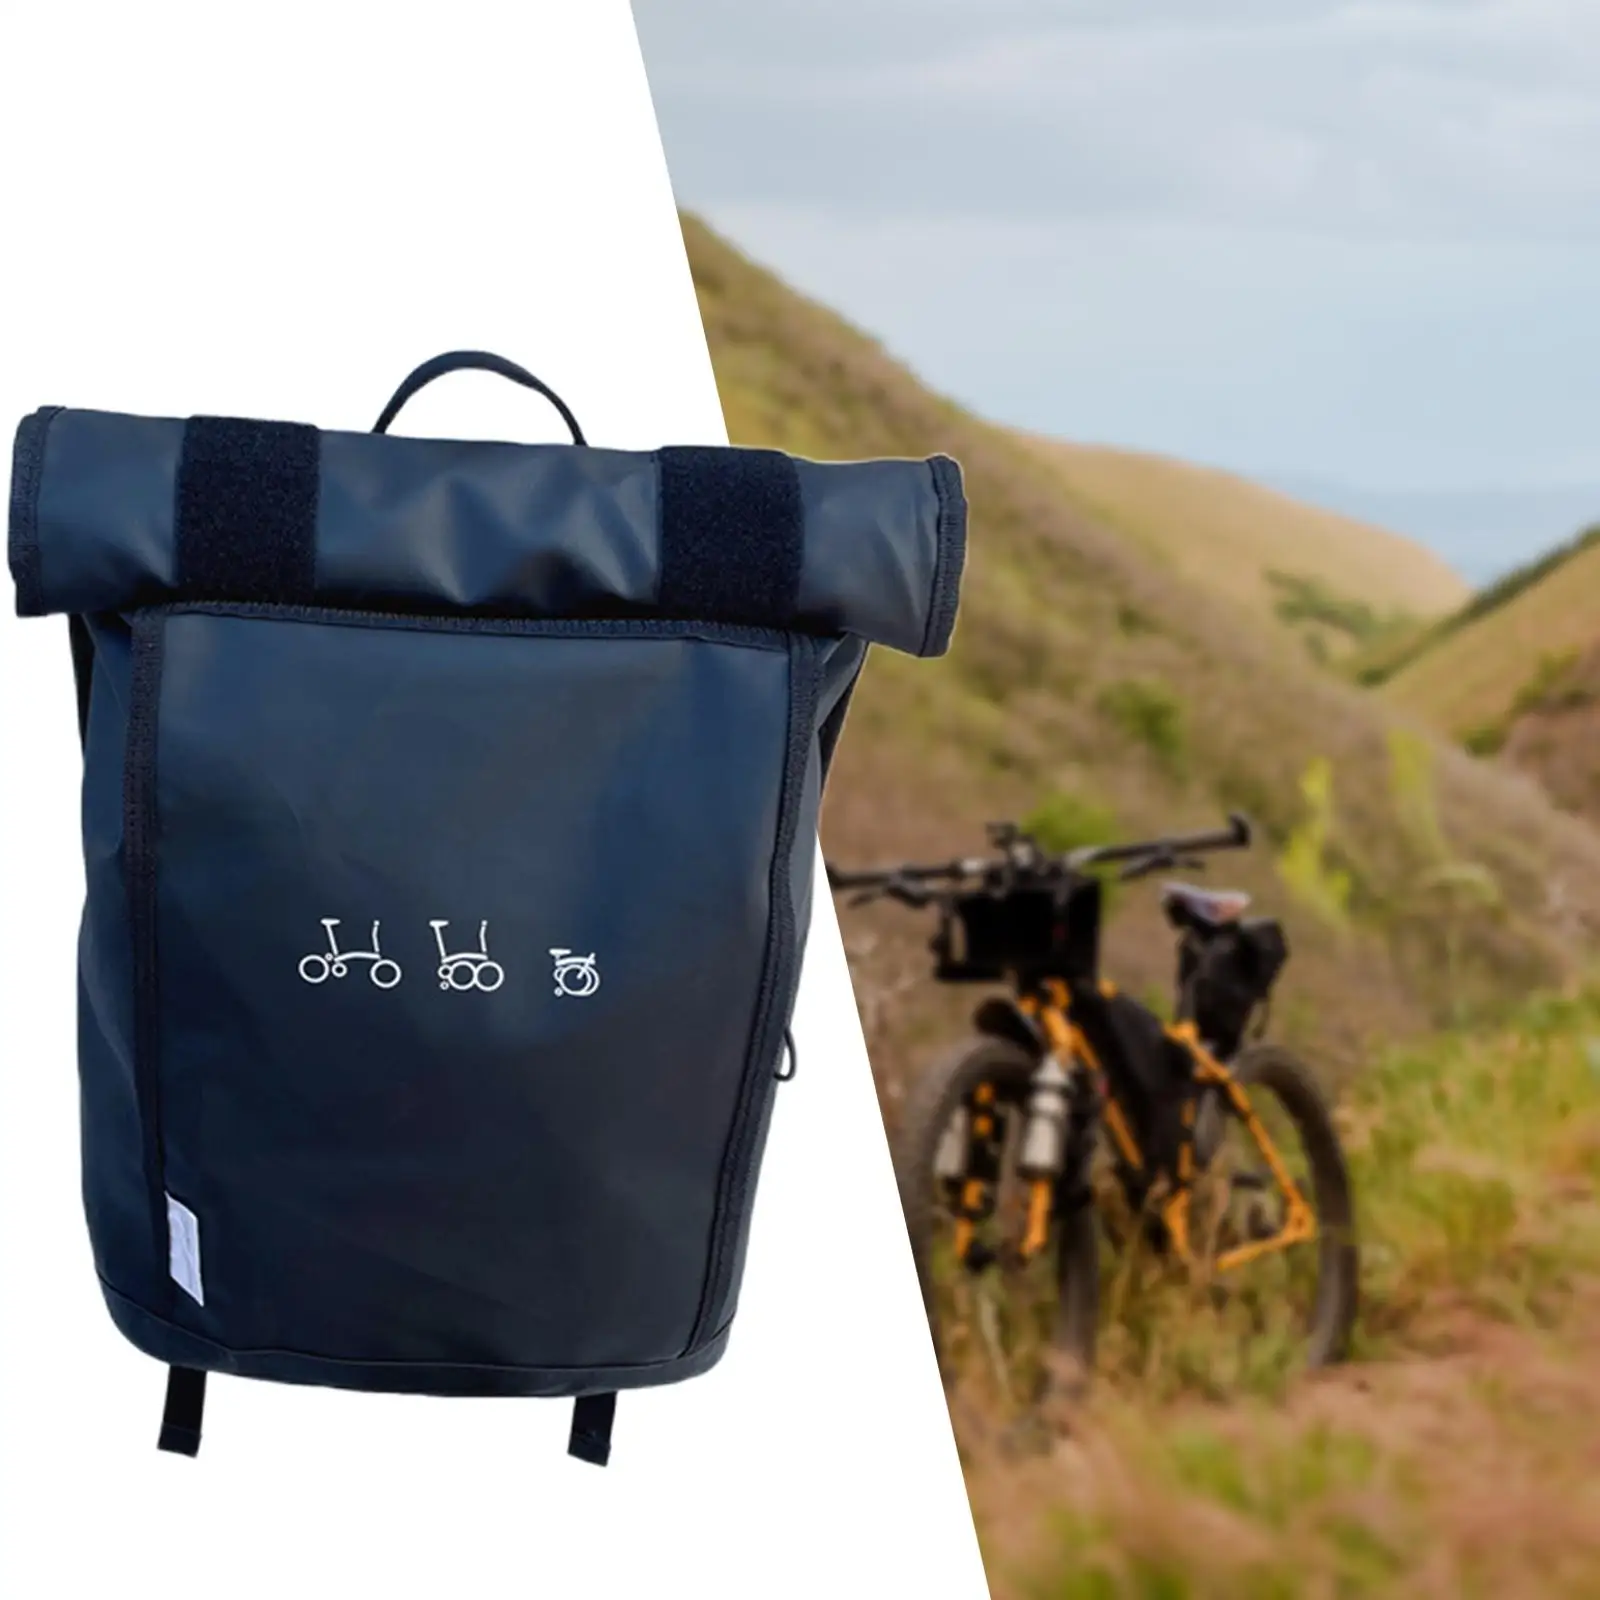 Folding Bike Front Bag Basket Bicycle Frame Bag for Riding Cycling Camping